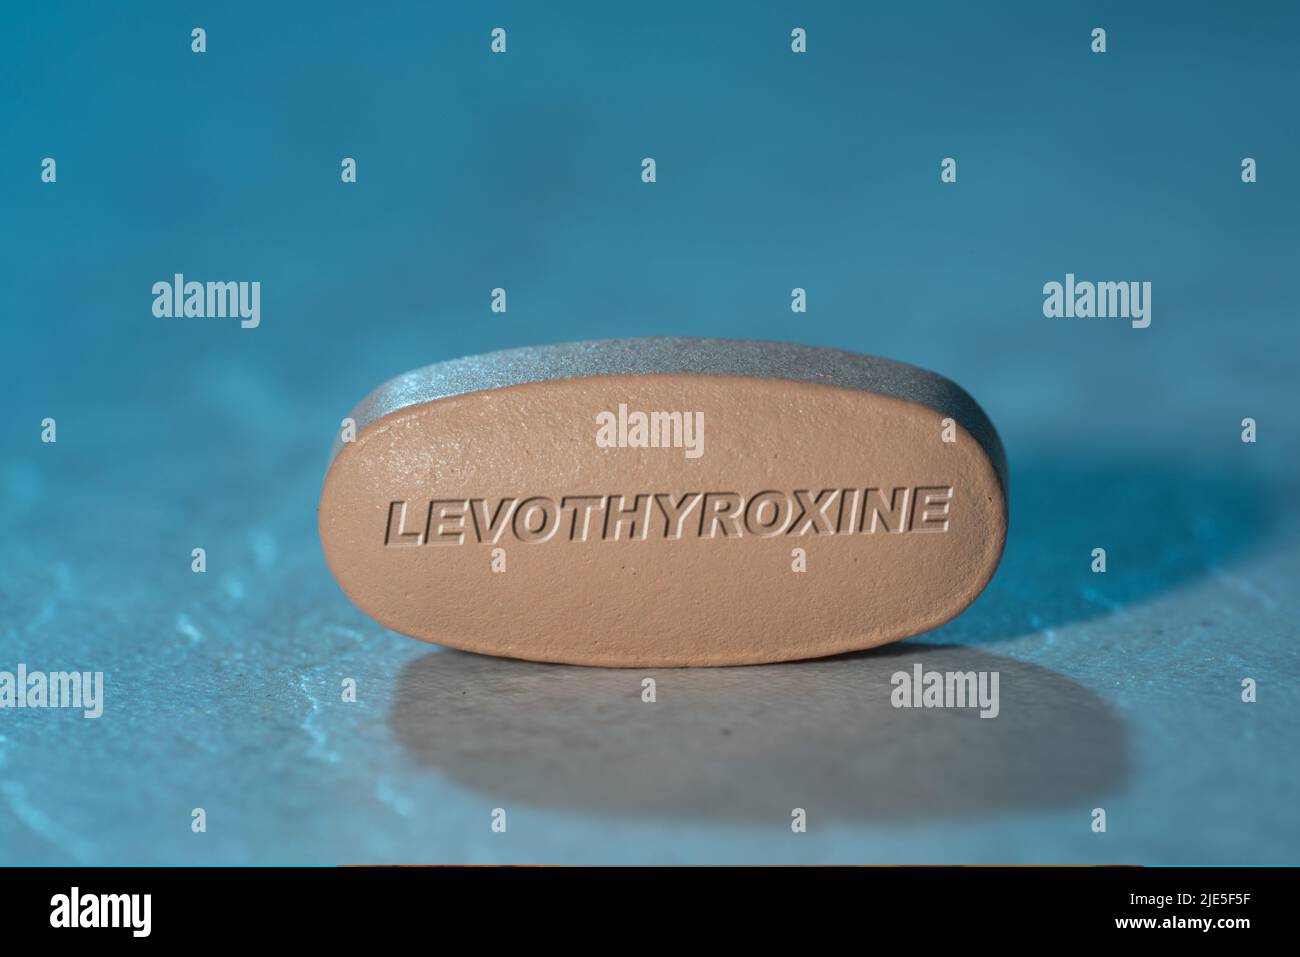 Levothyroxine drug Pill Medication ob blue background Stock Photo